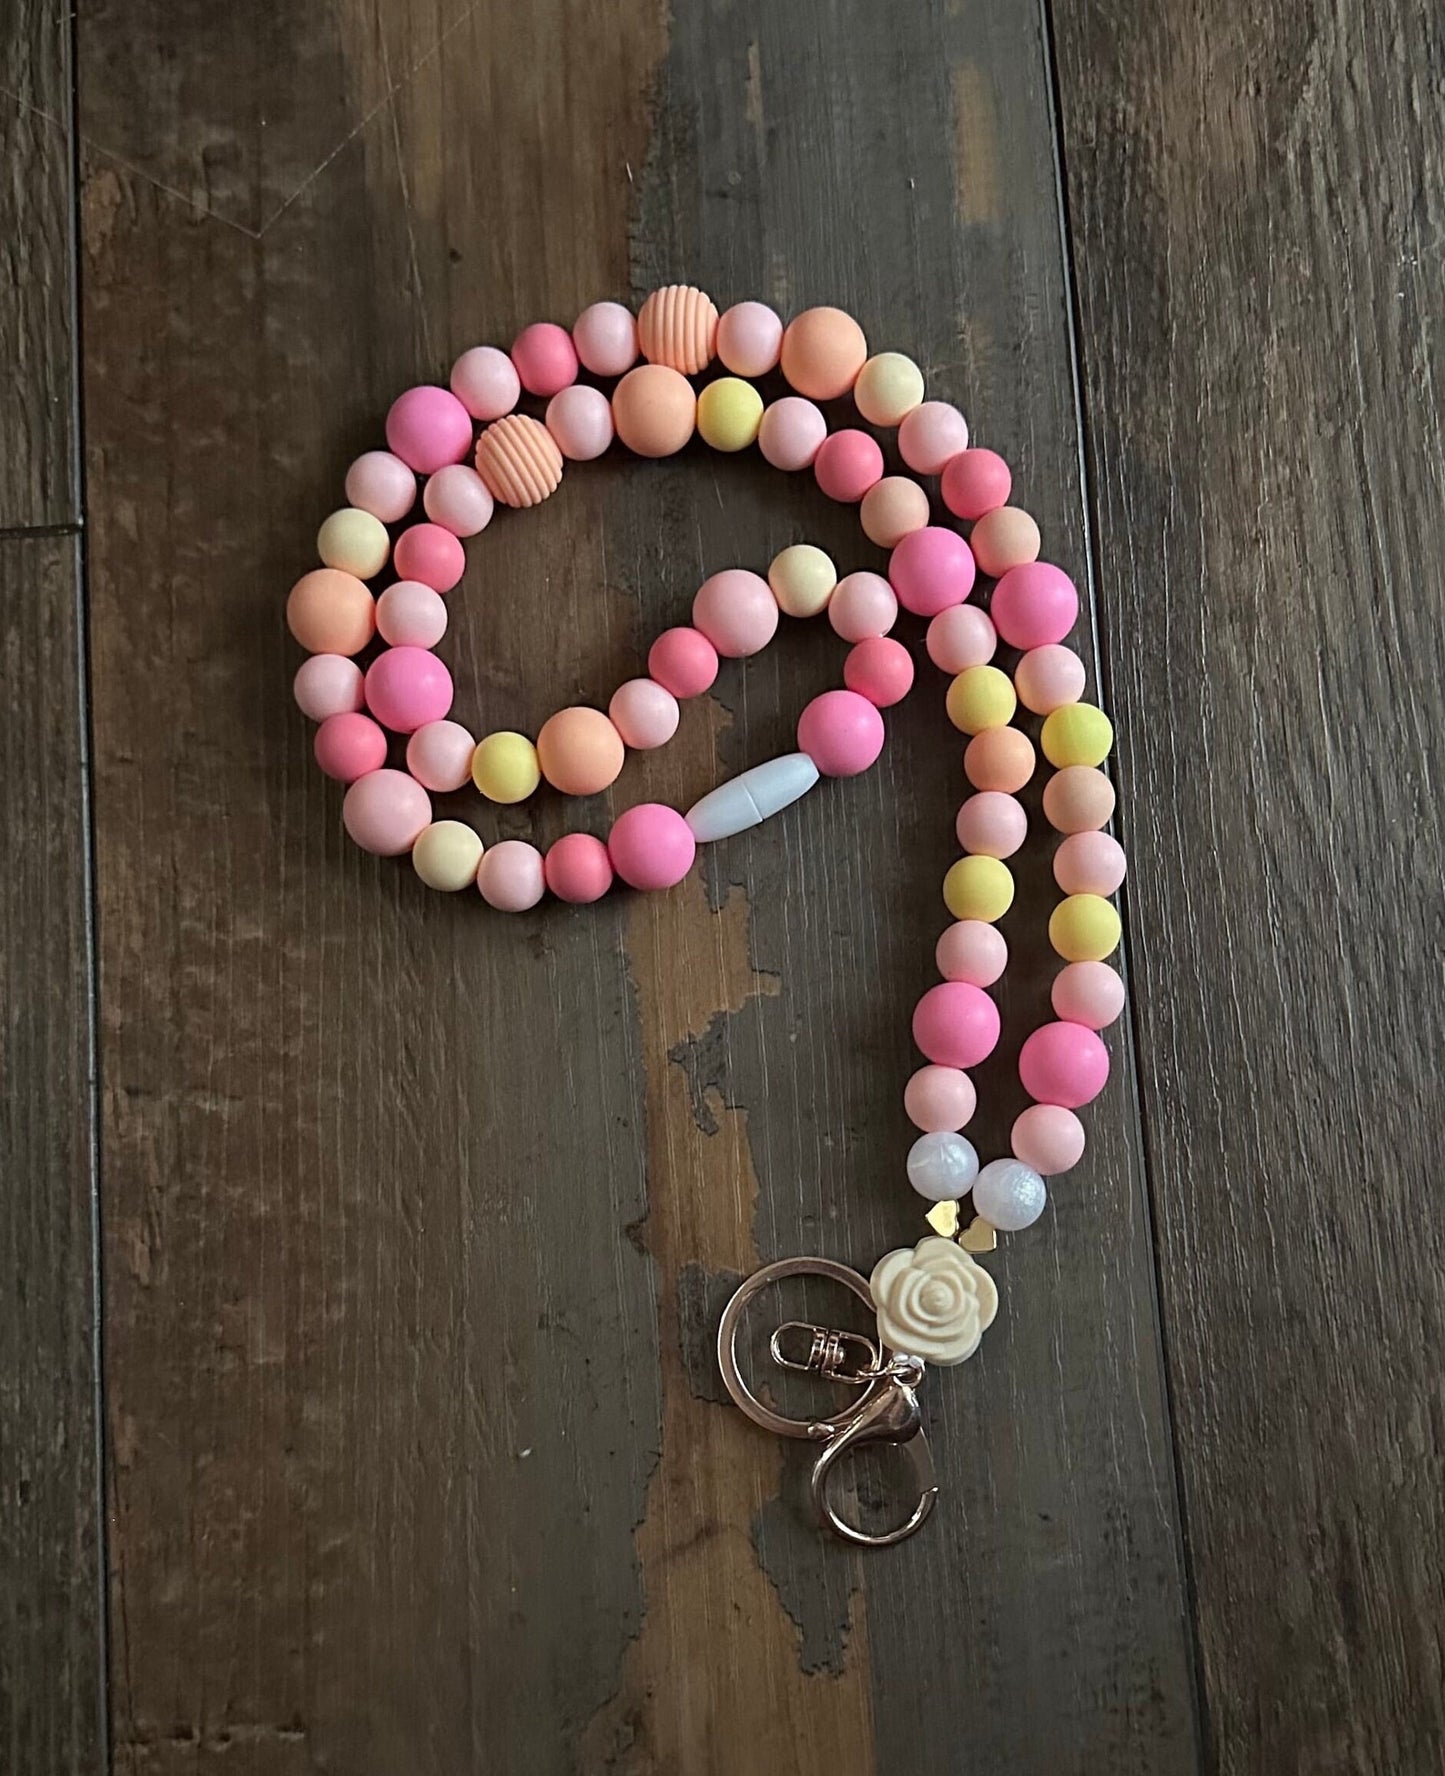 Silicone bead pink sunset pattern lanyard for teachers nurses id badge holder customizable lanyard teacher appreciation gift school supply